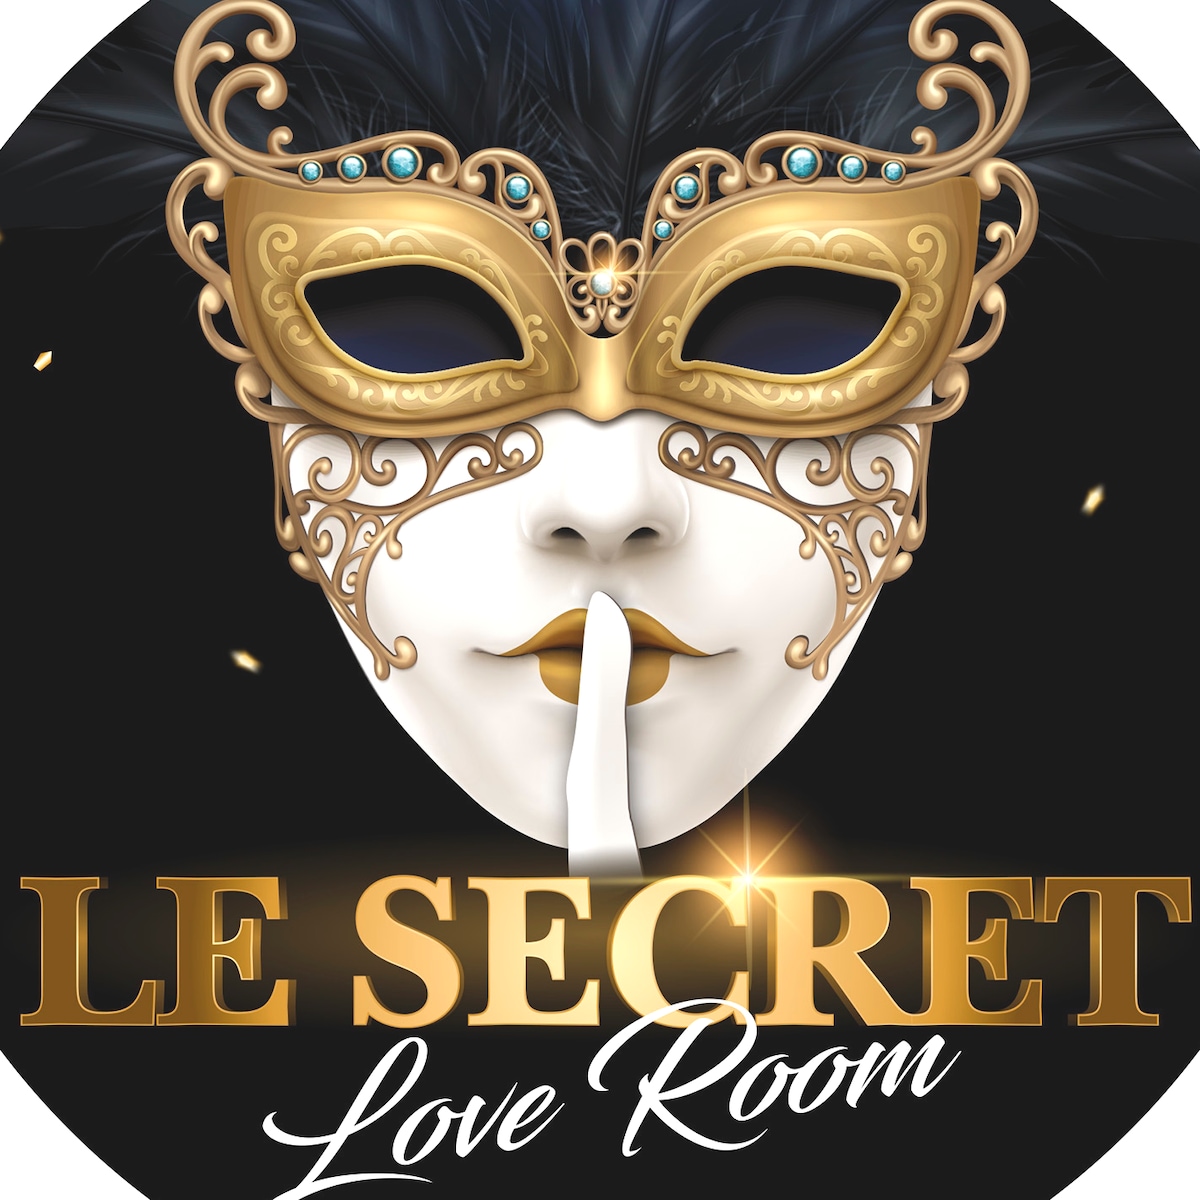 Le Secret Love Room